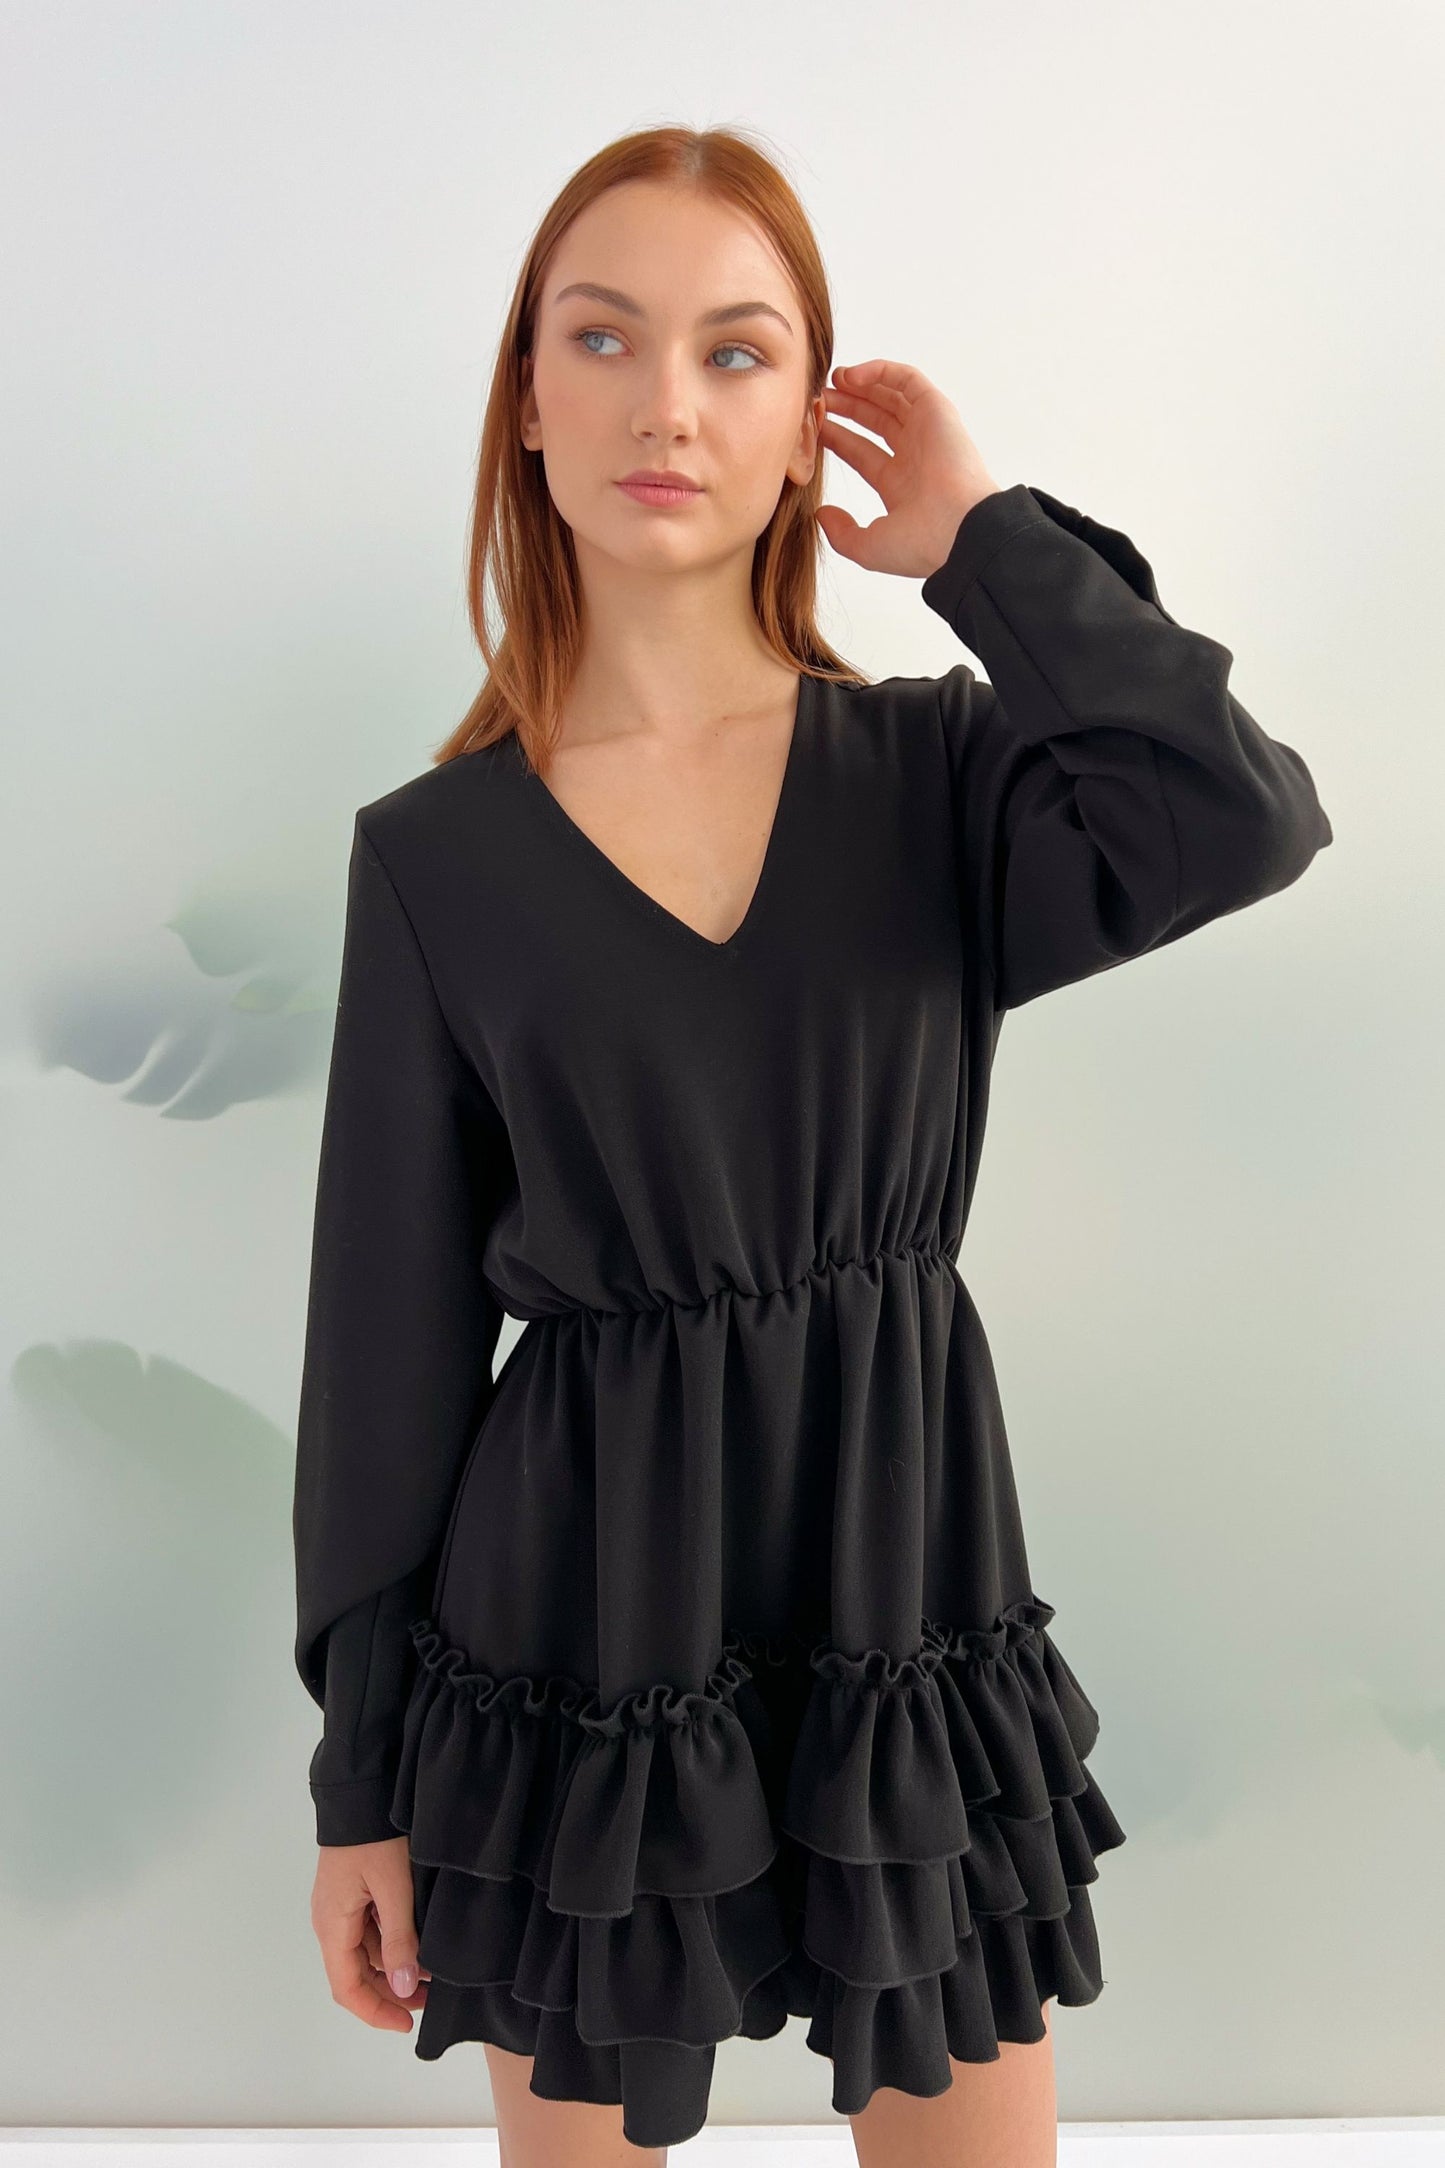 Black dress with ruffles